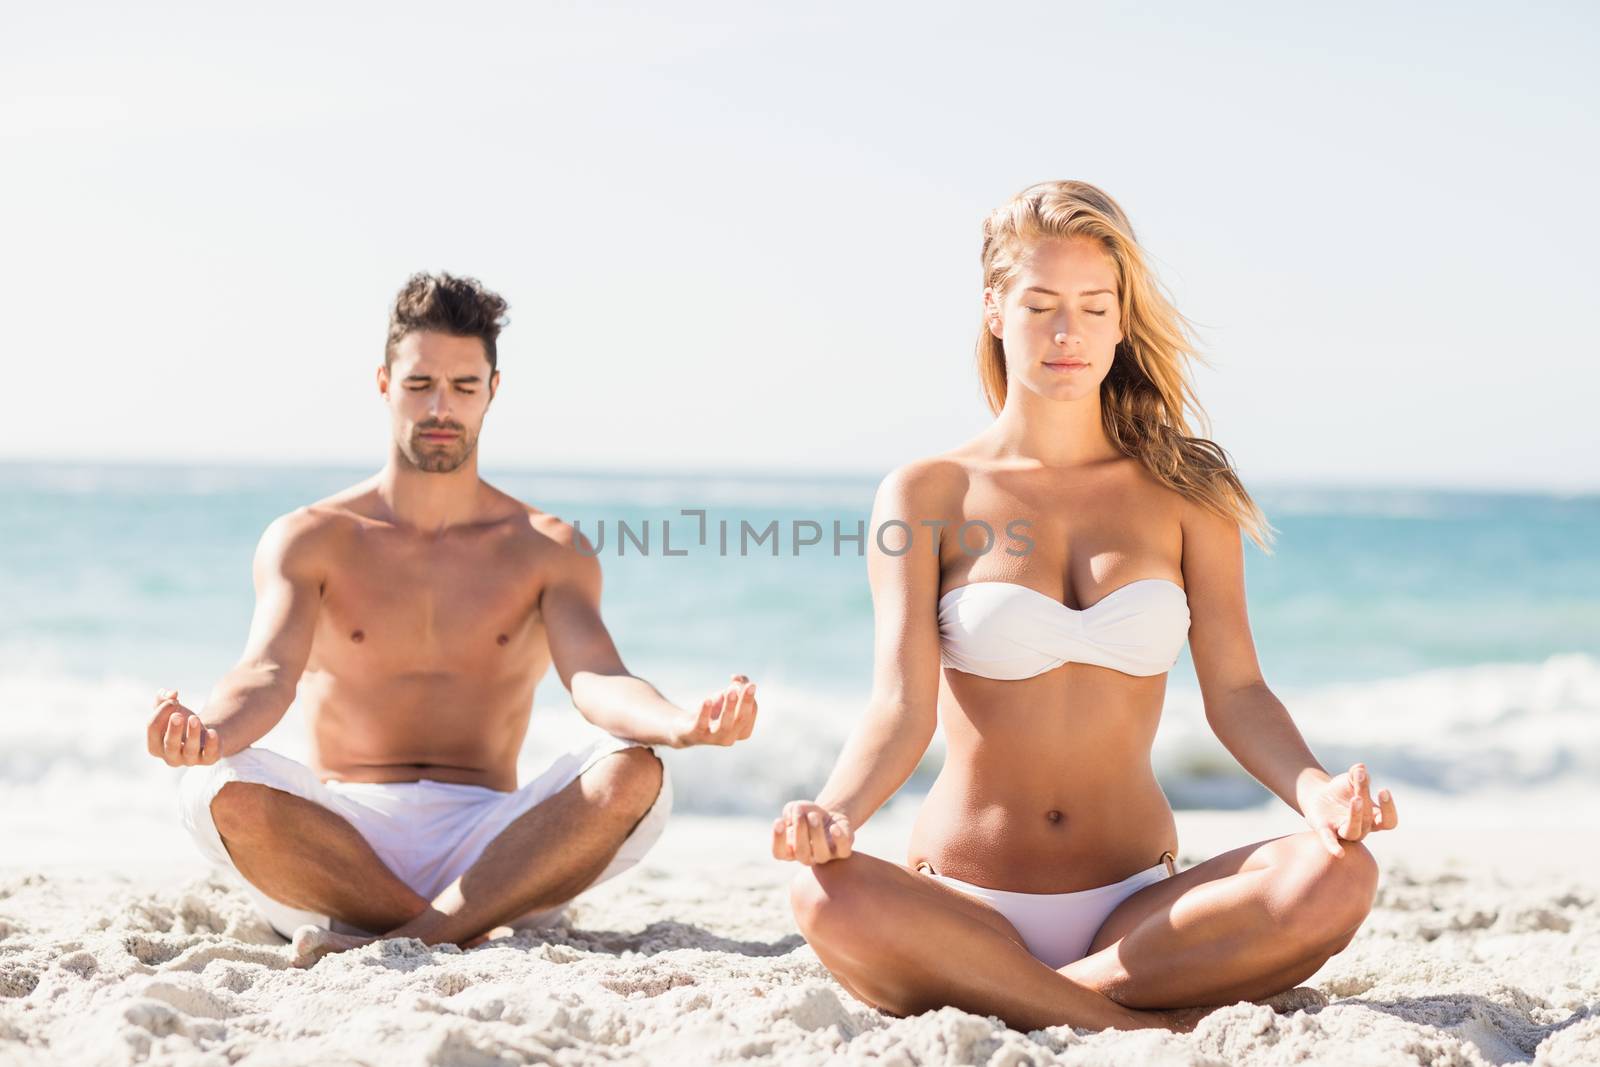 Happy couple doing yoga on the beach